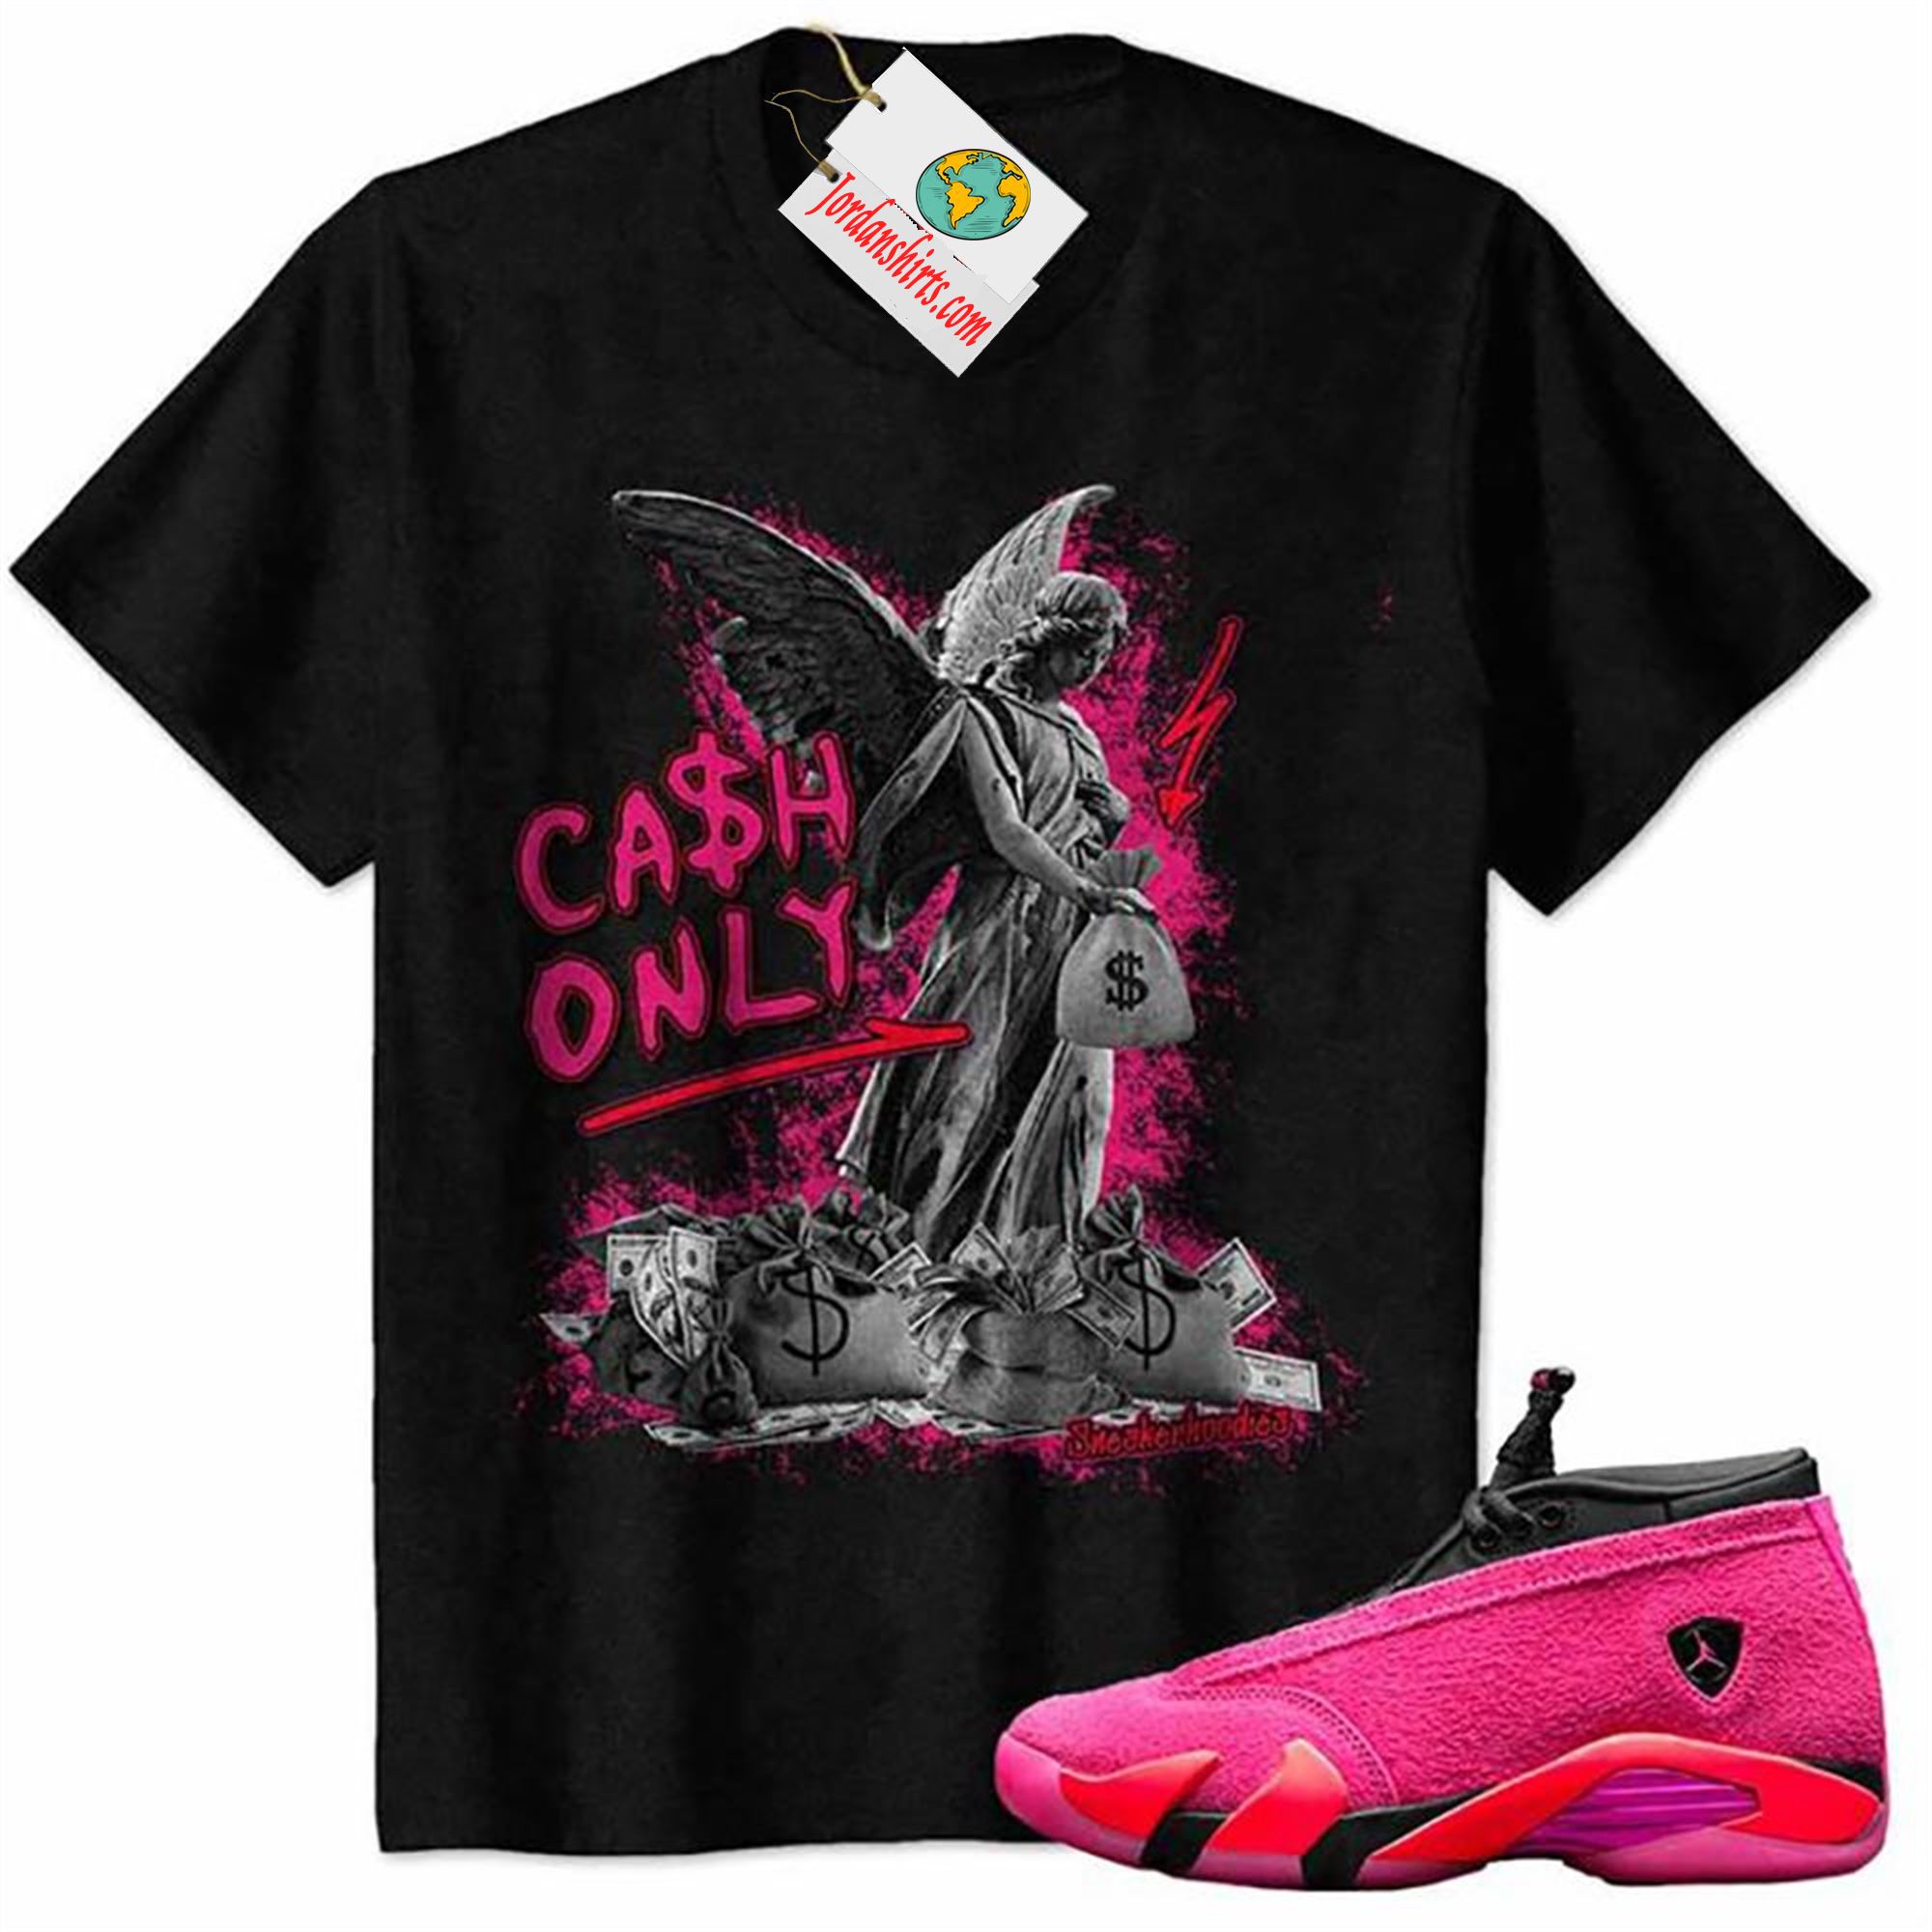 Jordan 14 Shirt, Cash Only Angel Dollar Money Bag Black Air Jordan 14 Wmns Shocking Pink 14s Size Up To 5xl